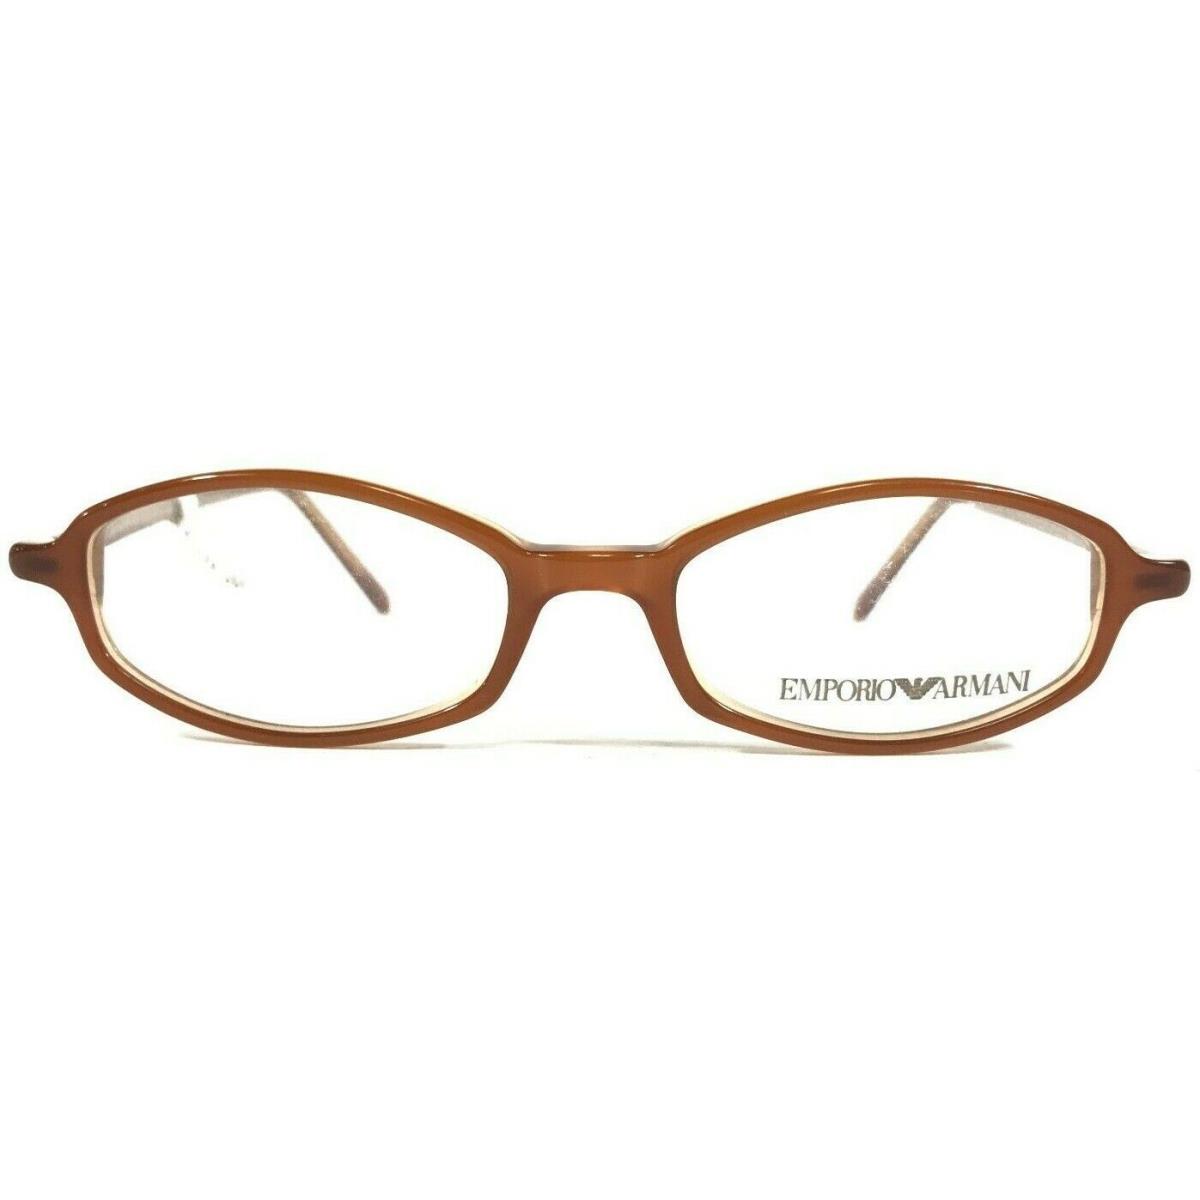 Emporio Armani 591 314 Eyeglasses Frames Brown Round Oval Full Rim 47-16-135